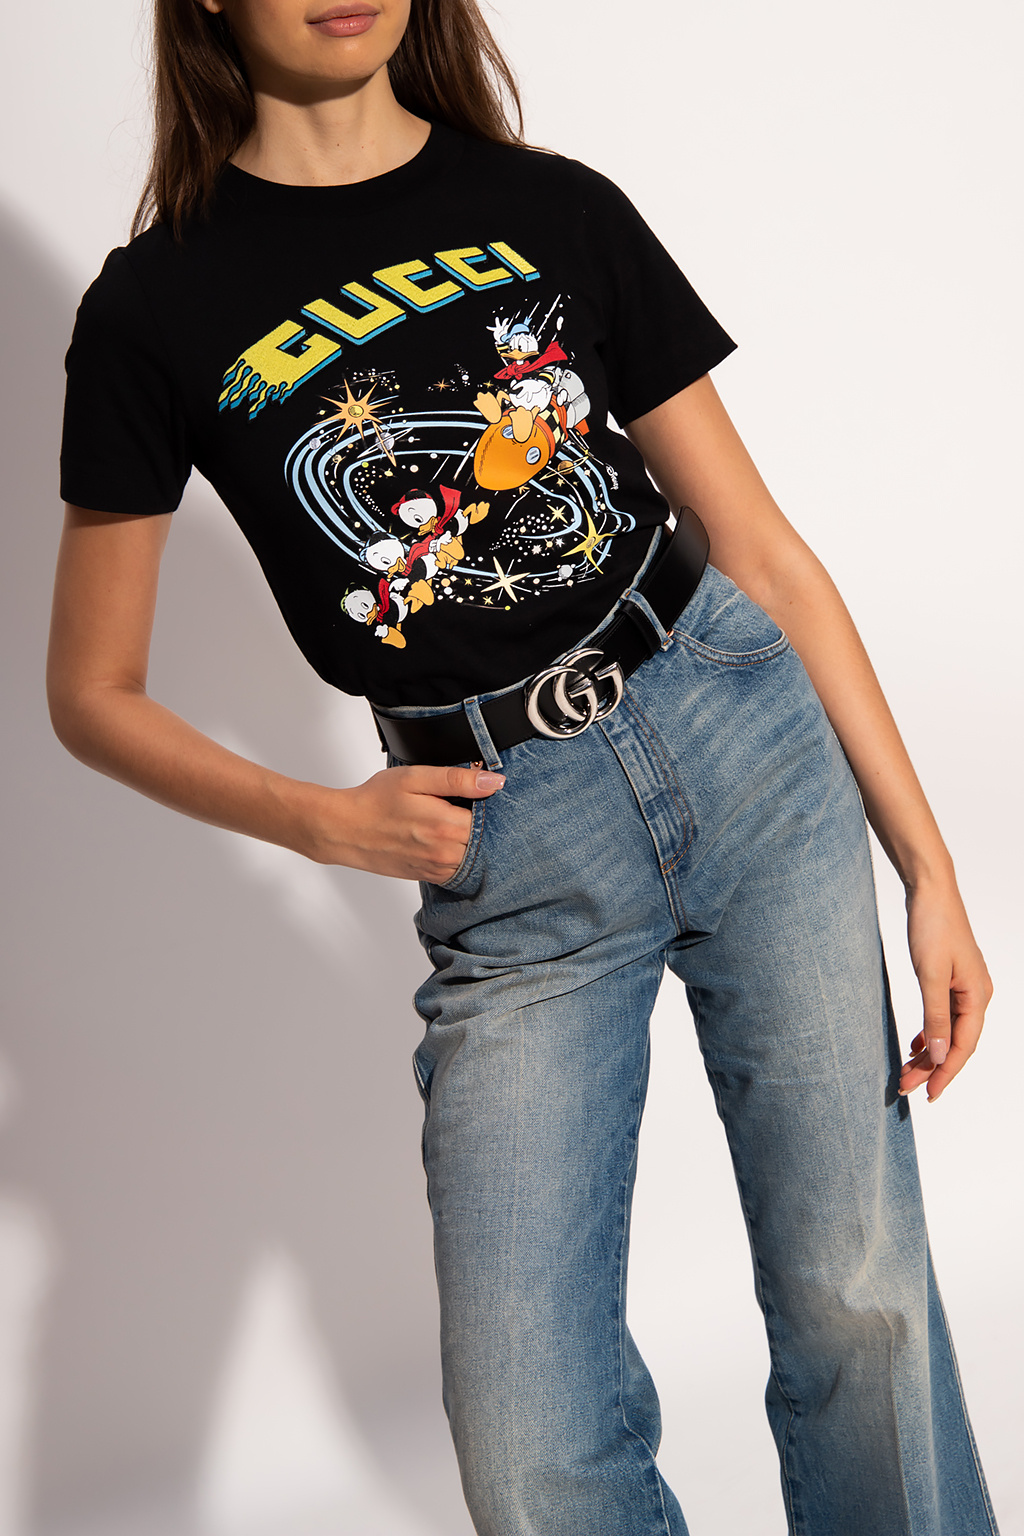 Gucci Gucci x Disney | IetpShops | adidas bk6722 pants sale women 